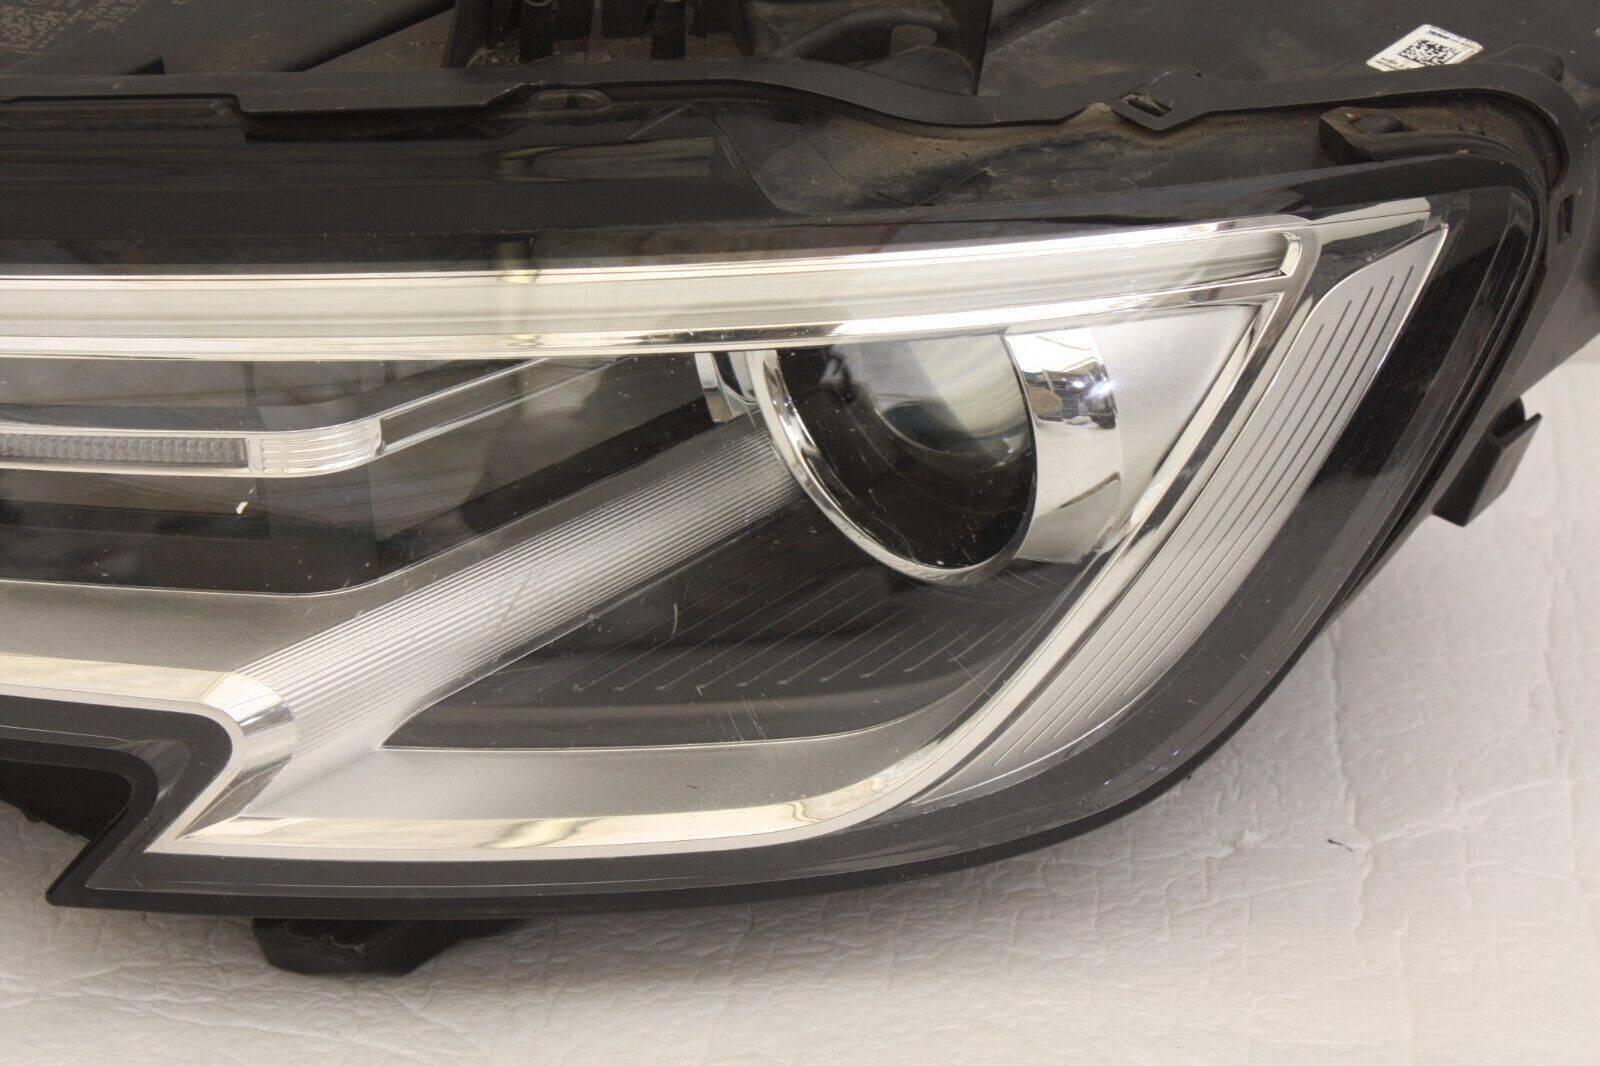 Audi-A3-Left-Side-Xenon-Headlight-8V0941005F-Genuine-ONE-LUG-DAMAGED-176369741688-2